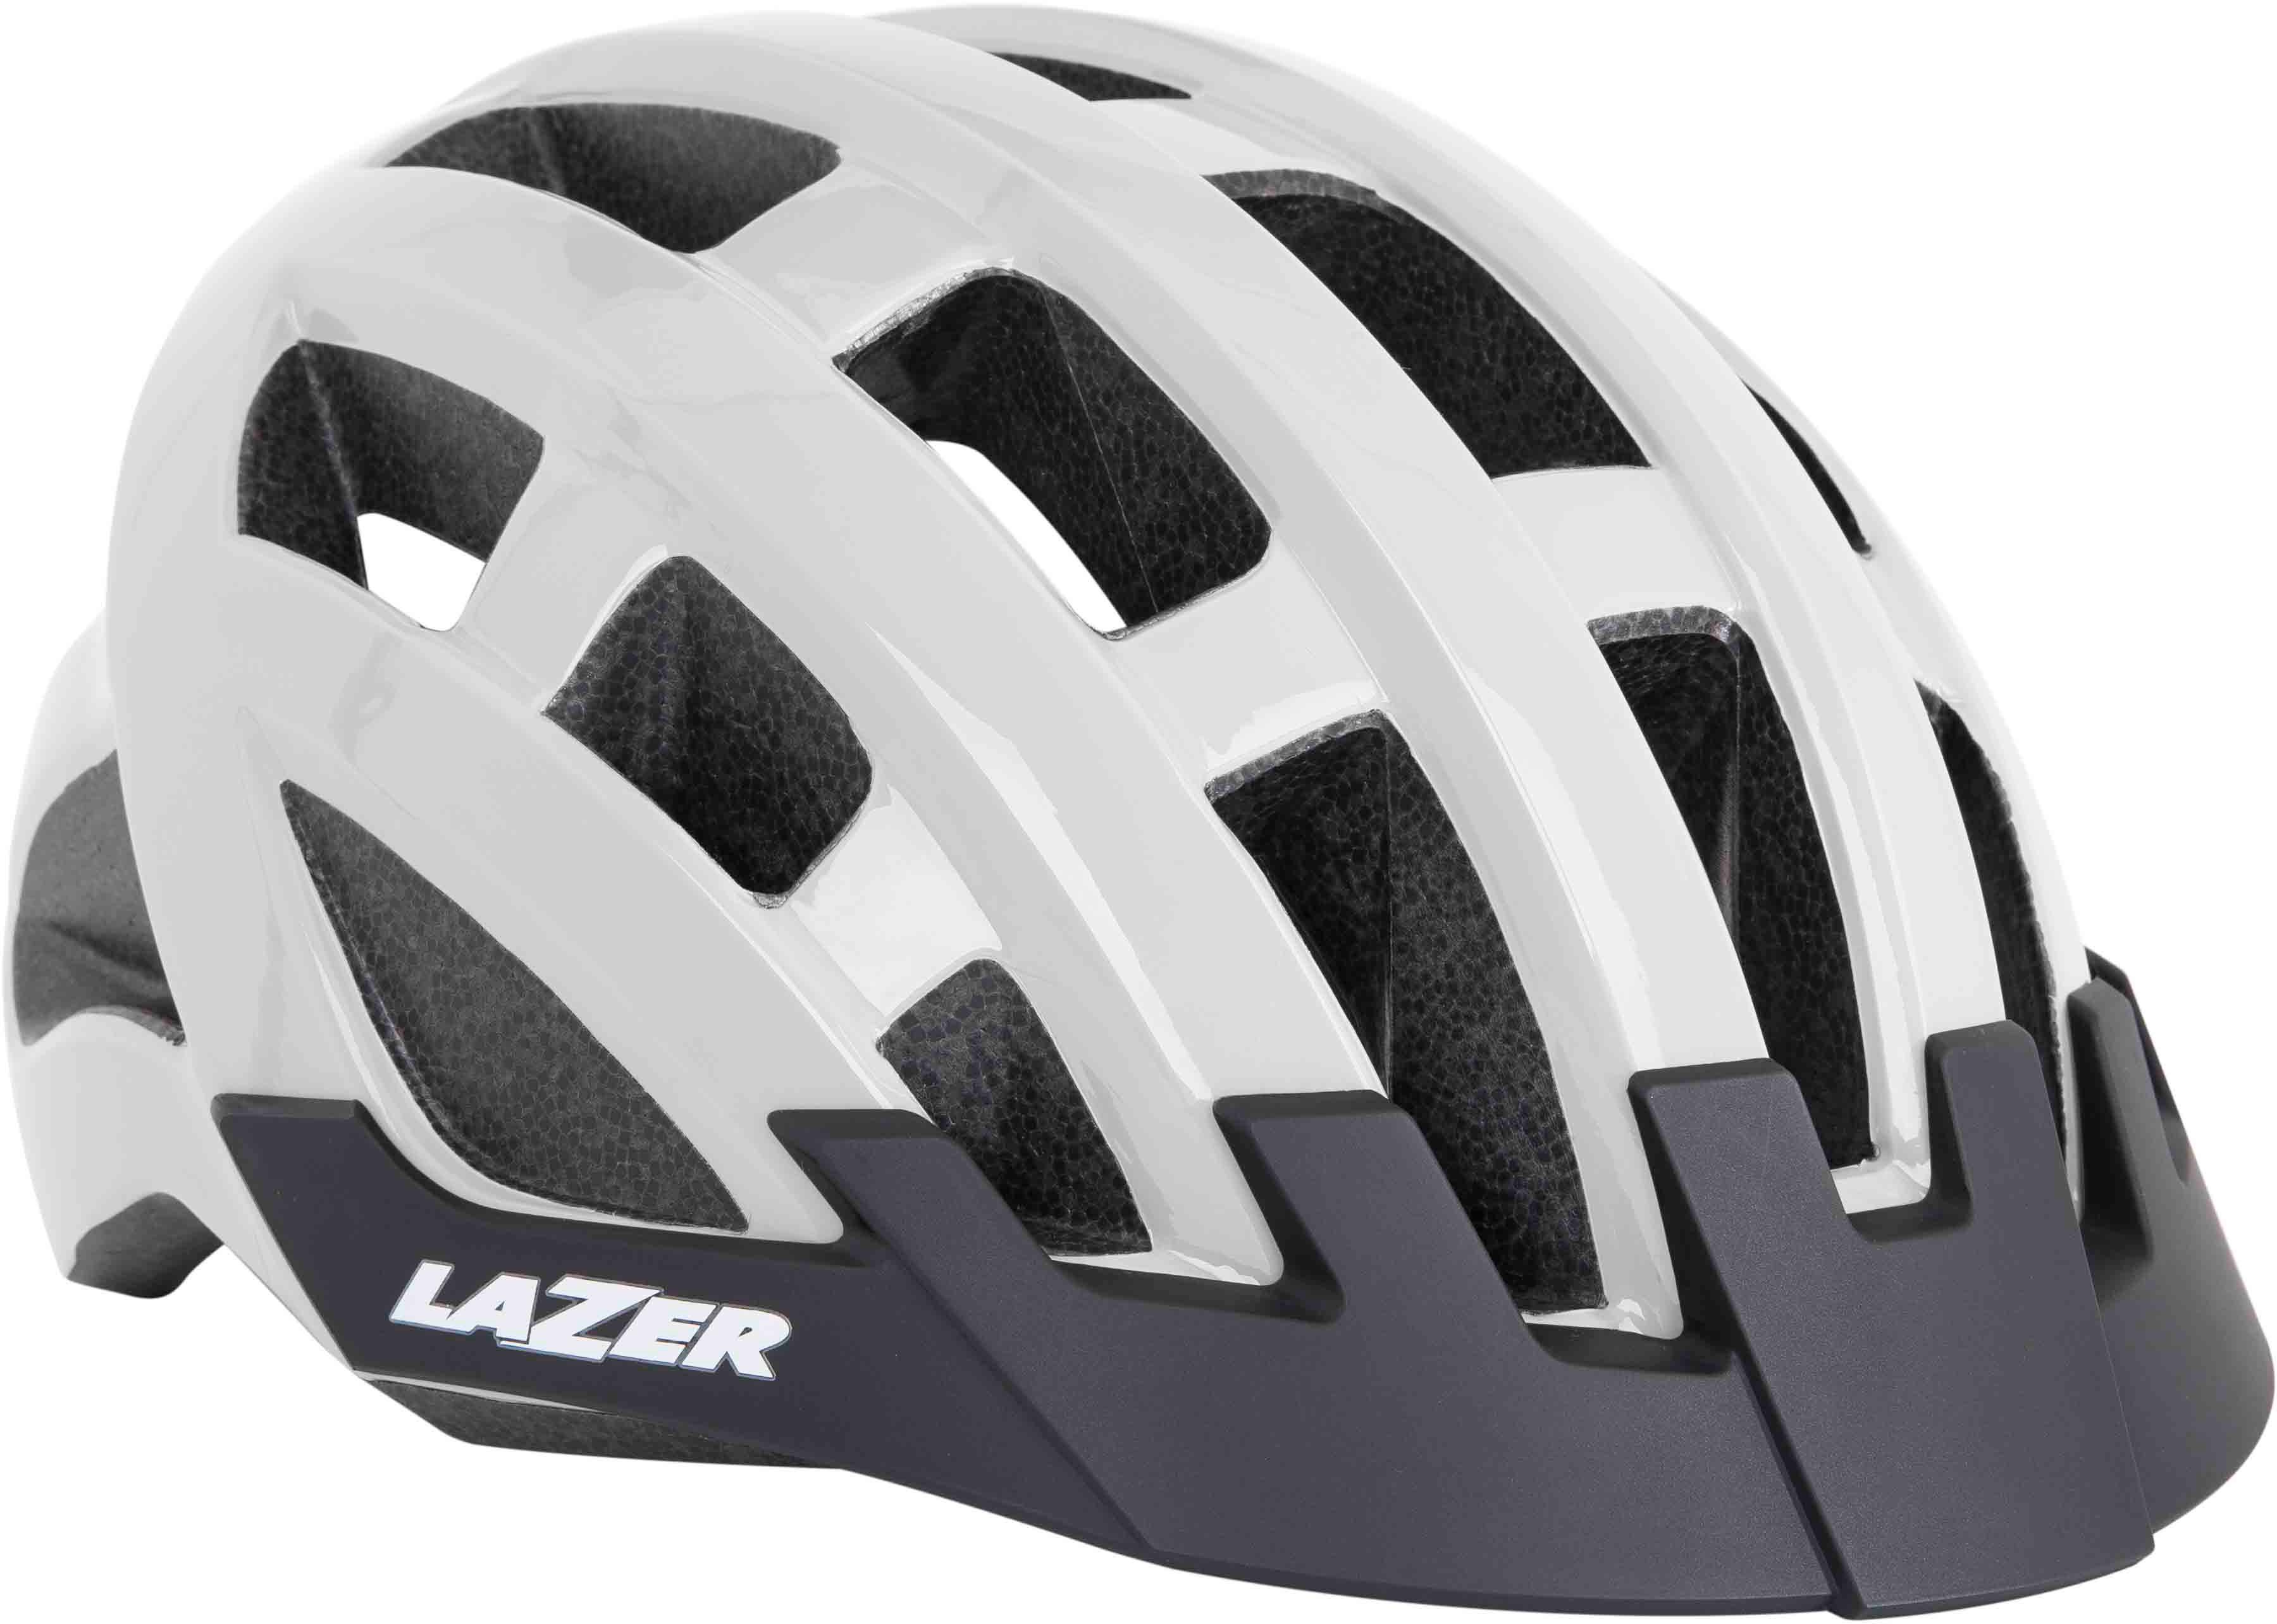 Lazer Compact Helmet Flash White